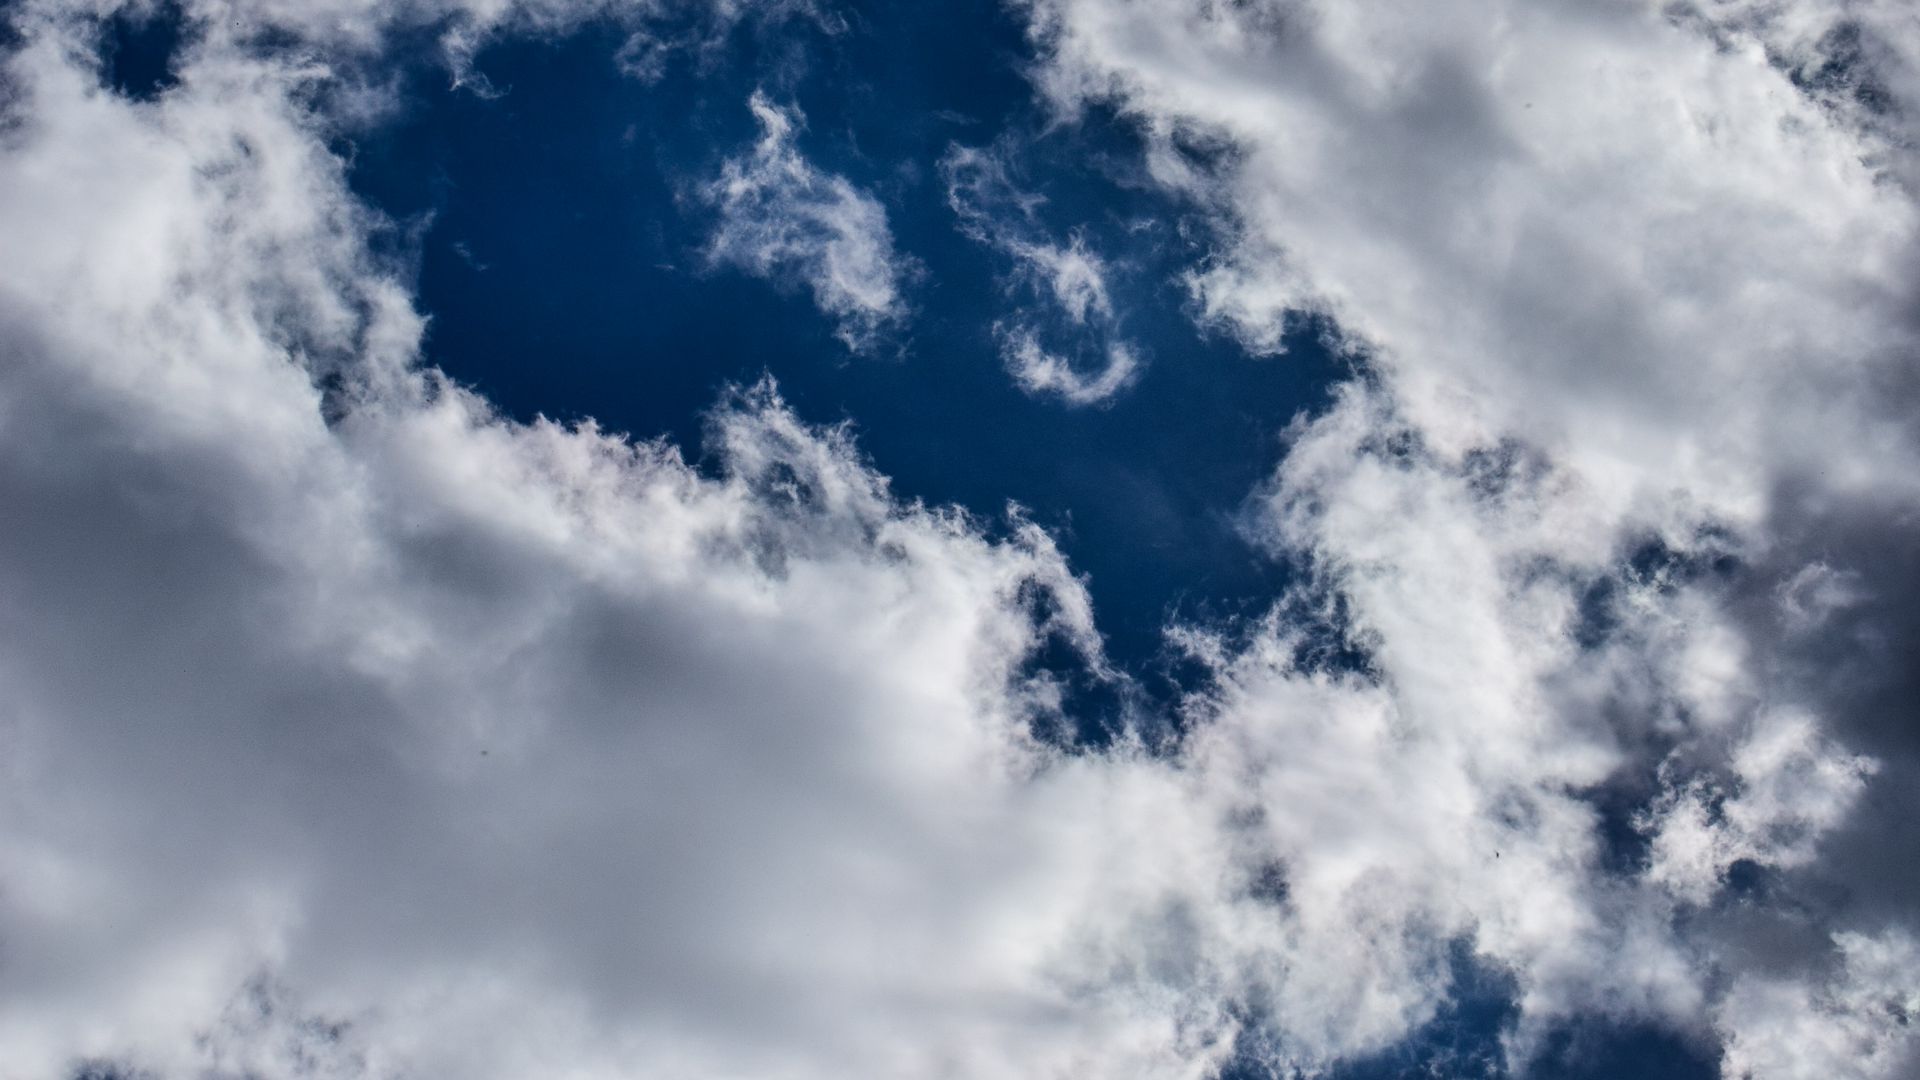 Download wallpaper 1920x1080 sky, clouds, lightness, blue full hd, hdtv ...